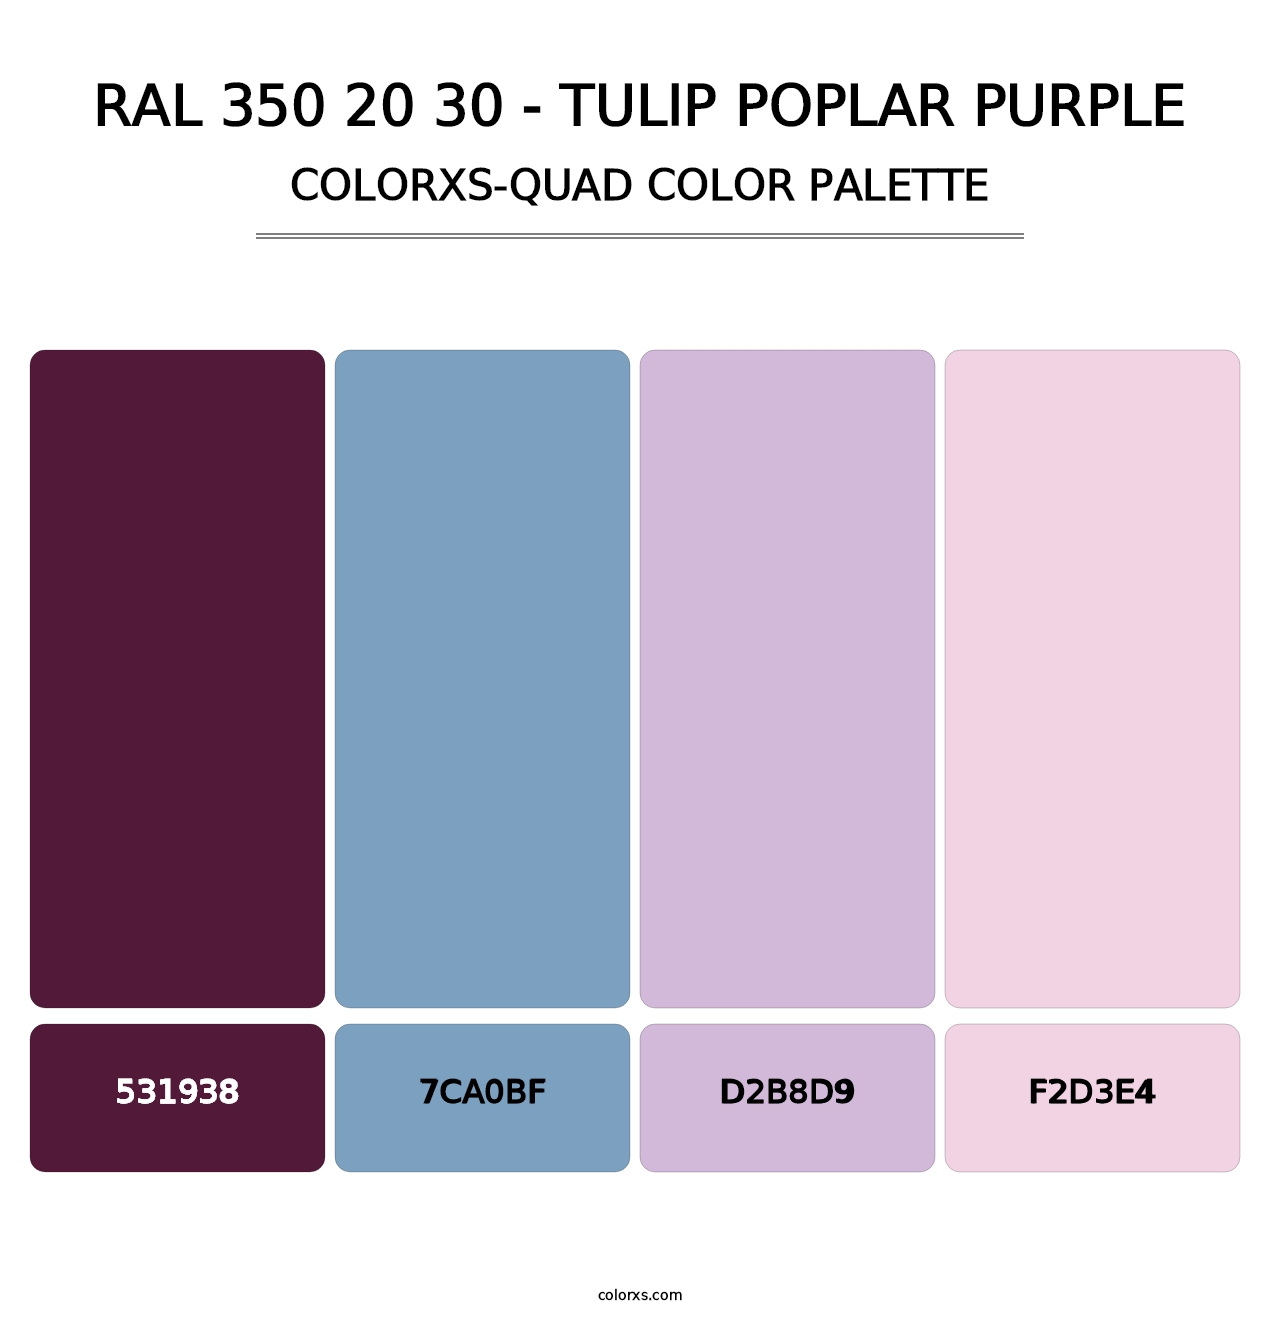 RAL 350 20 30 - Tulip Poplar Purple - Colorxs Quad Palette